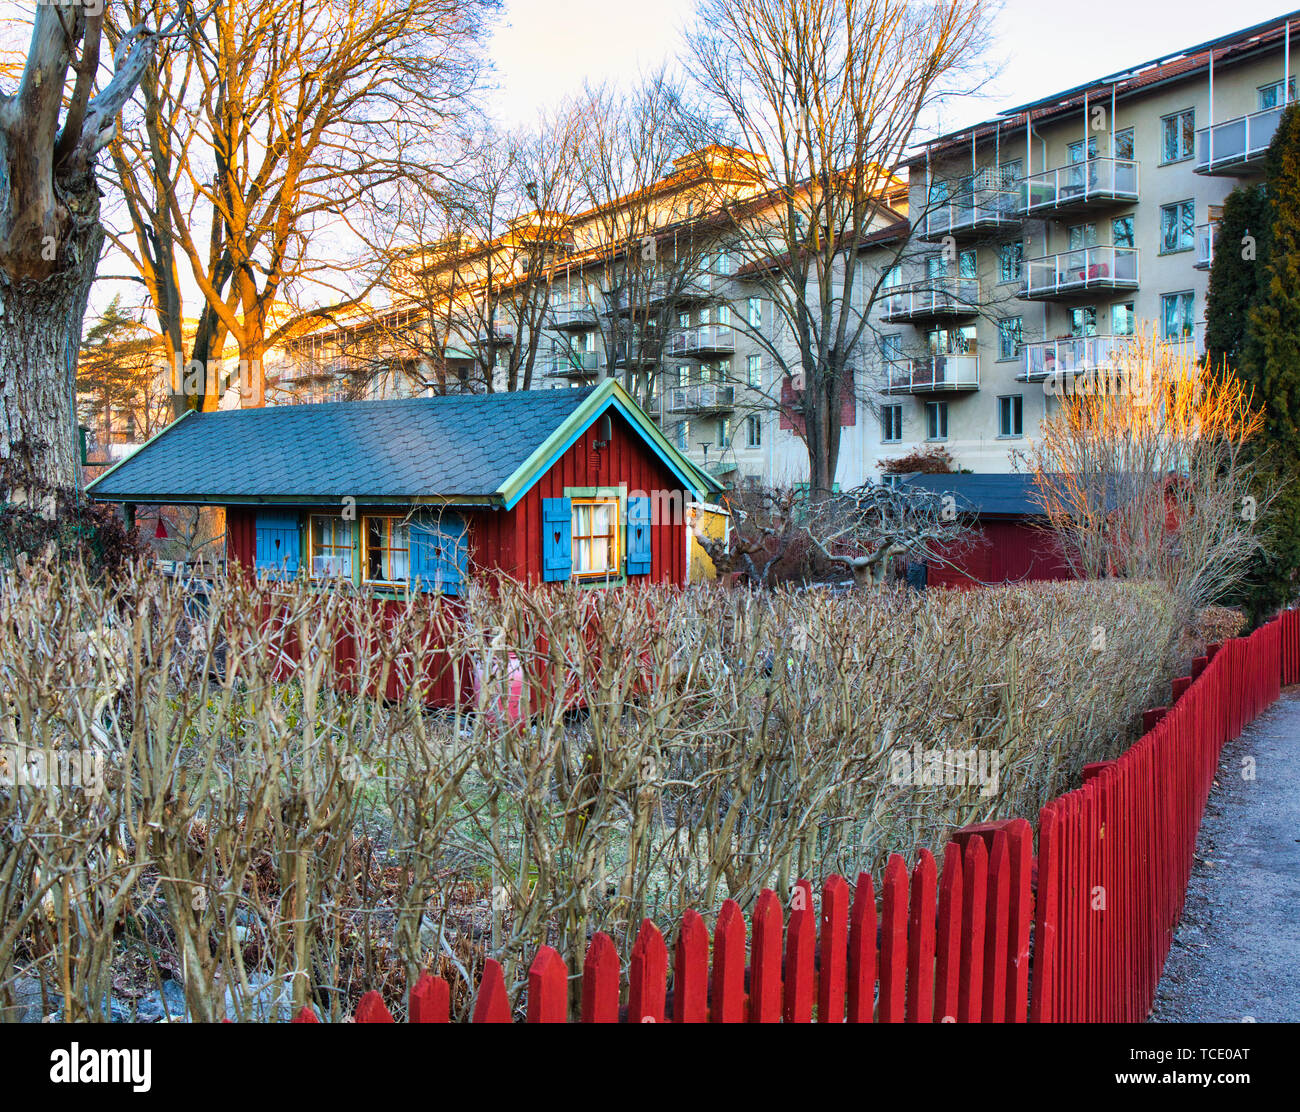 Traditional falun red fence, Tantolunden Allotment Gardens, Sodermalm, Stockholm, Sweden, Scandinavia Stock Photo